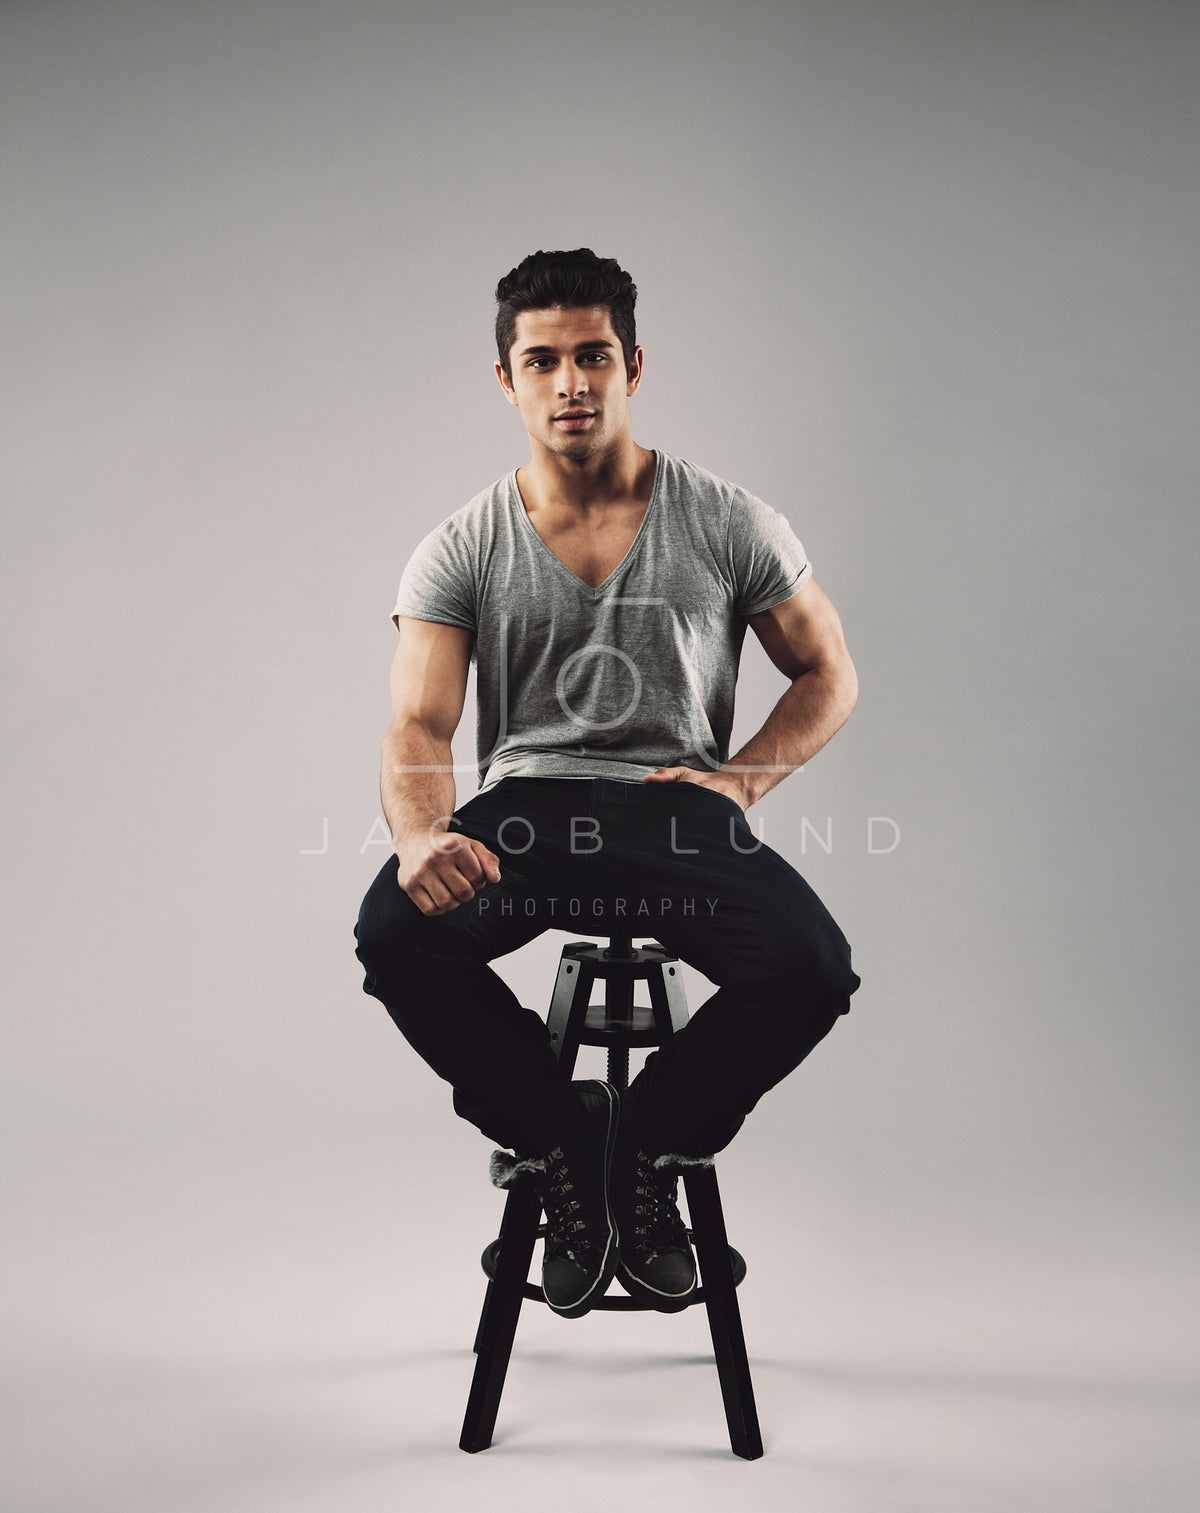 Men Model Sit On Chair By Stock Photo 1061080472 | Shutterstock